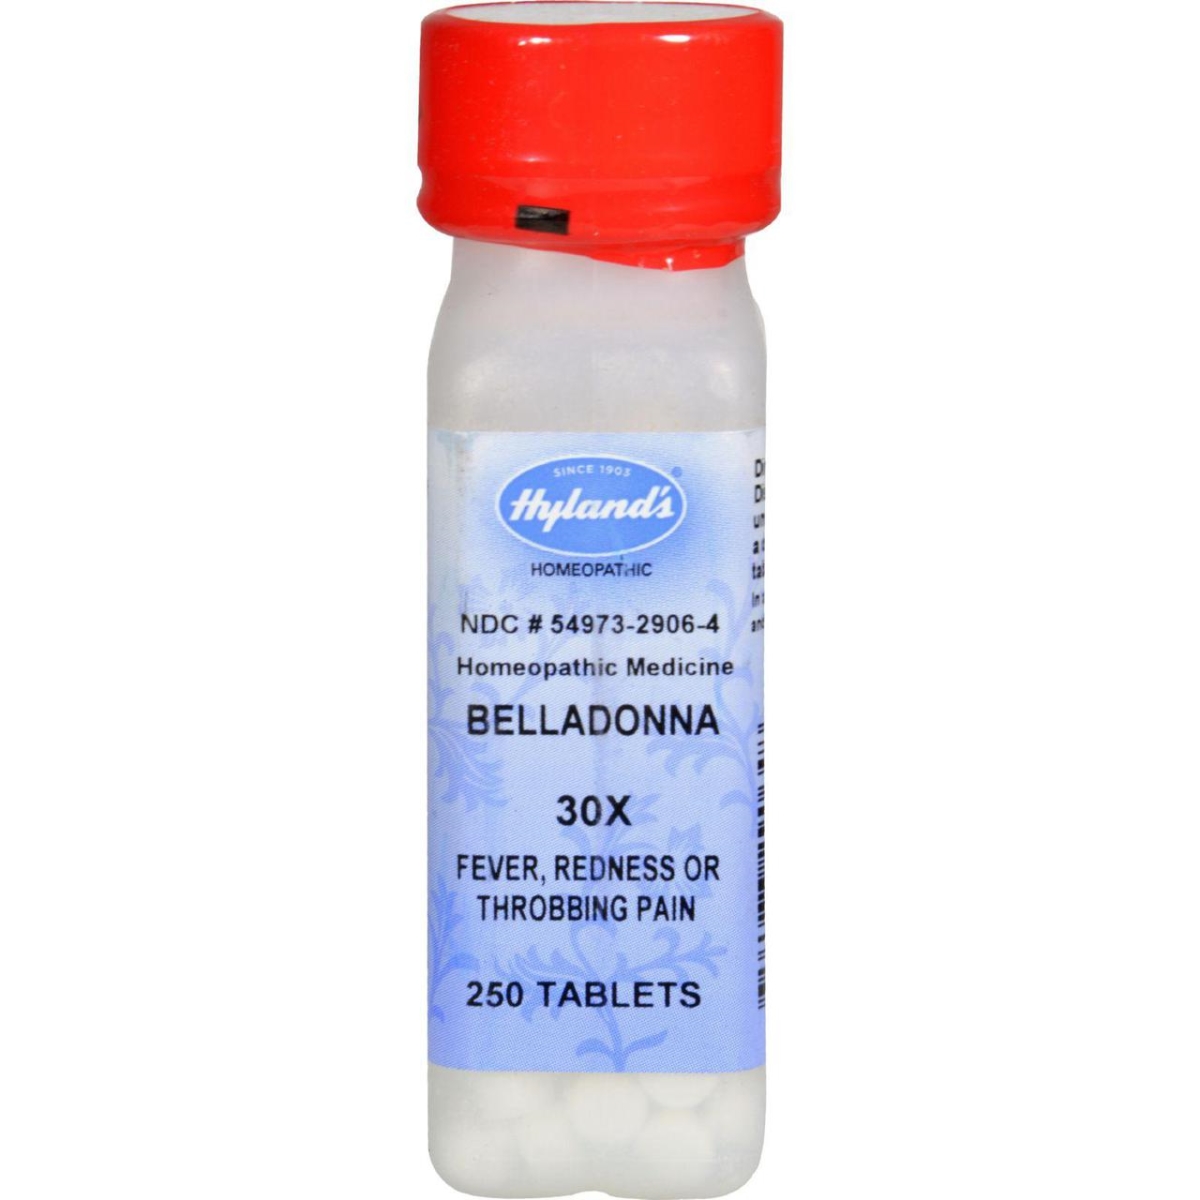 Hg0129783 Belladonna 30x, 250 Tablets